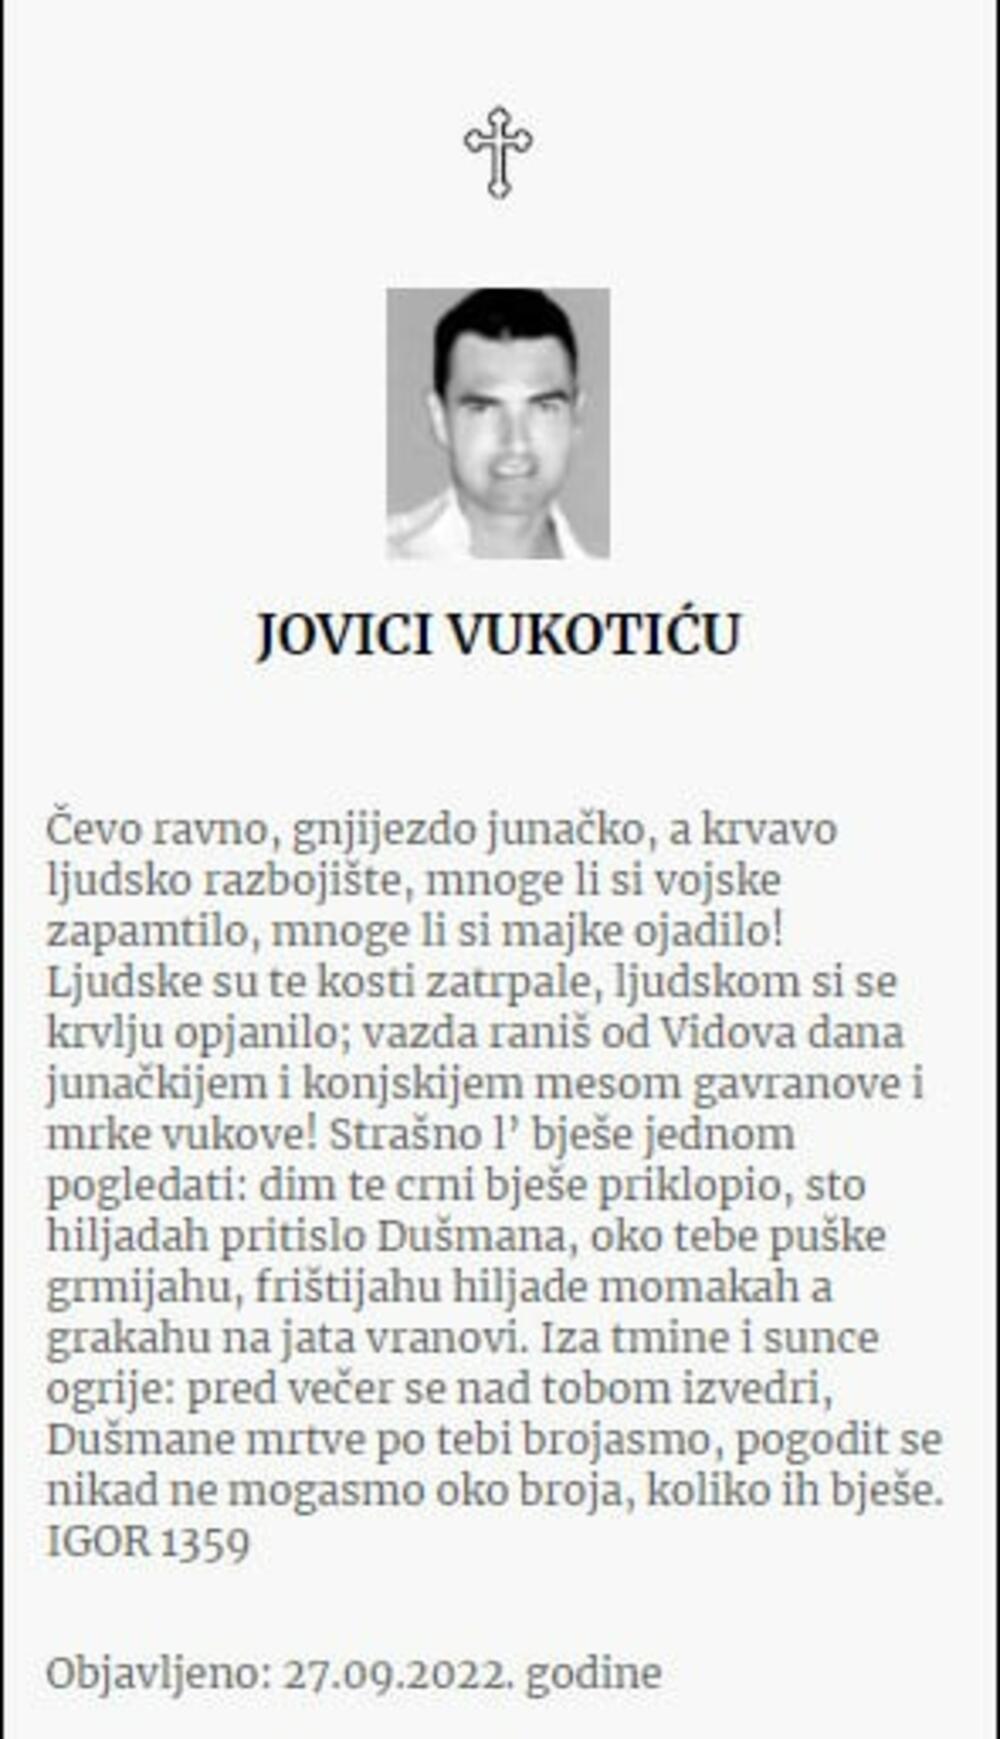 Jovan Vukotić